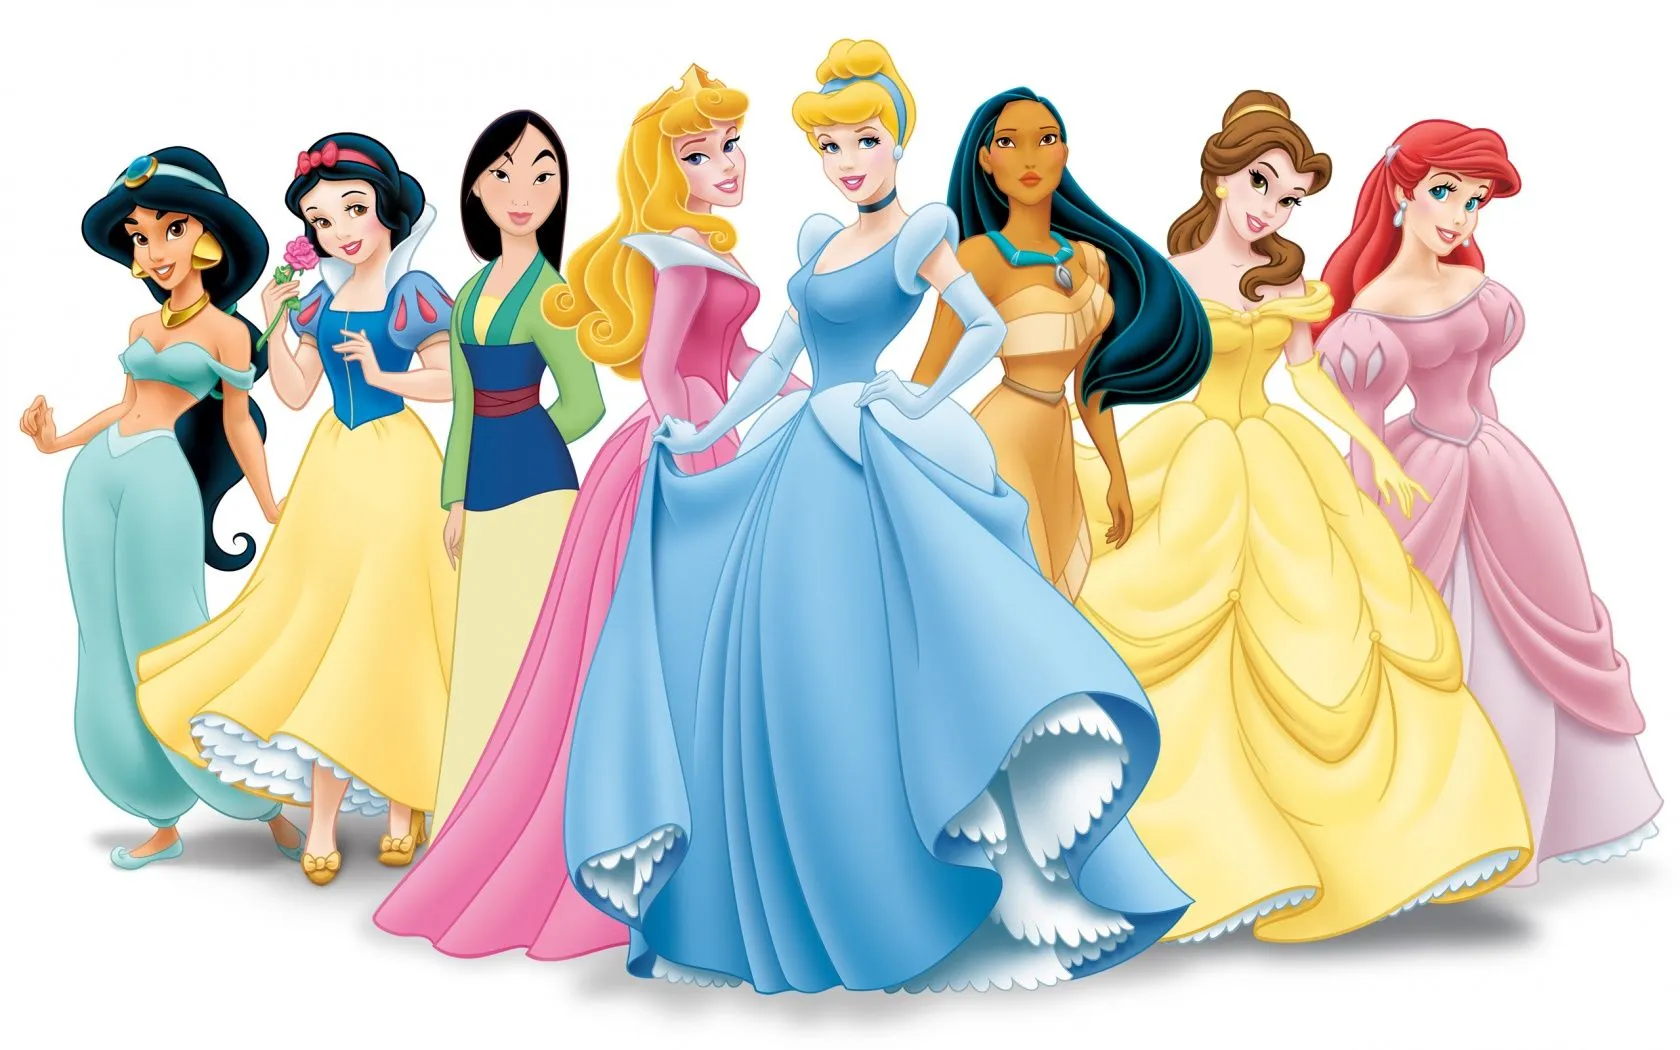 Disney Princess Wallpapers in jpg format for free download